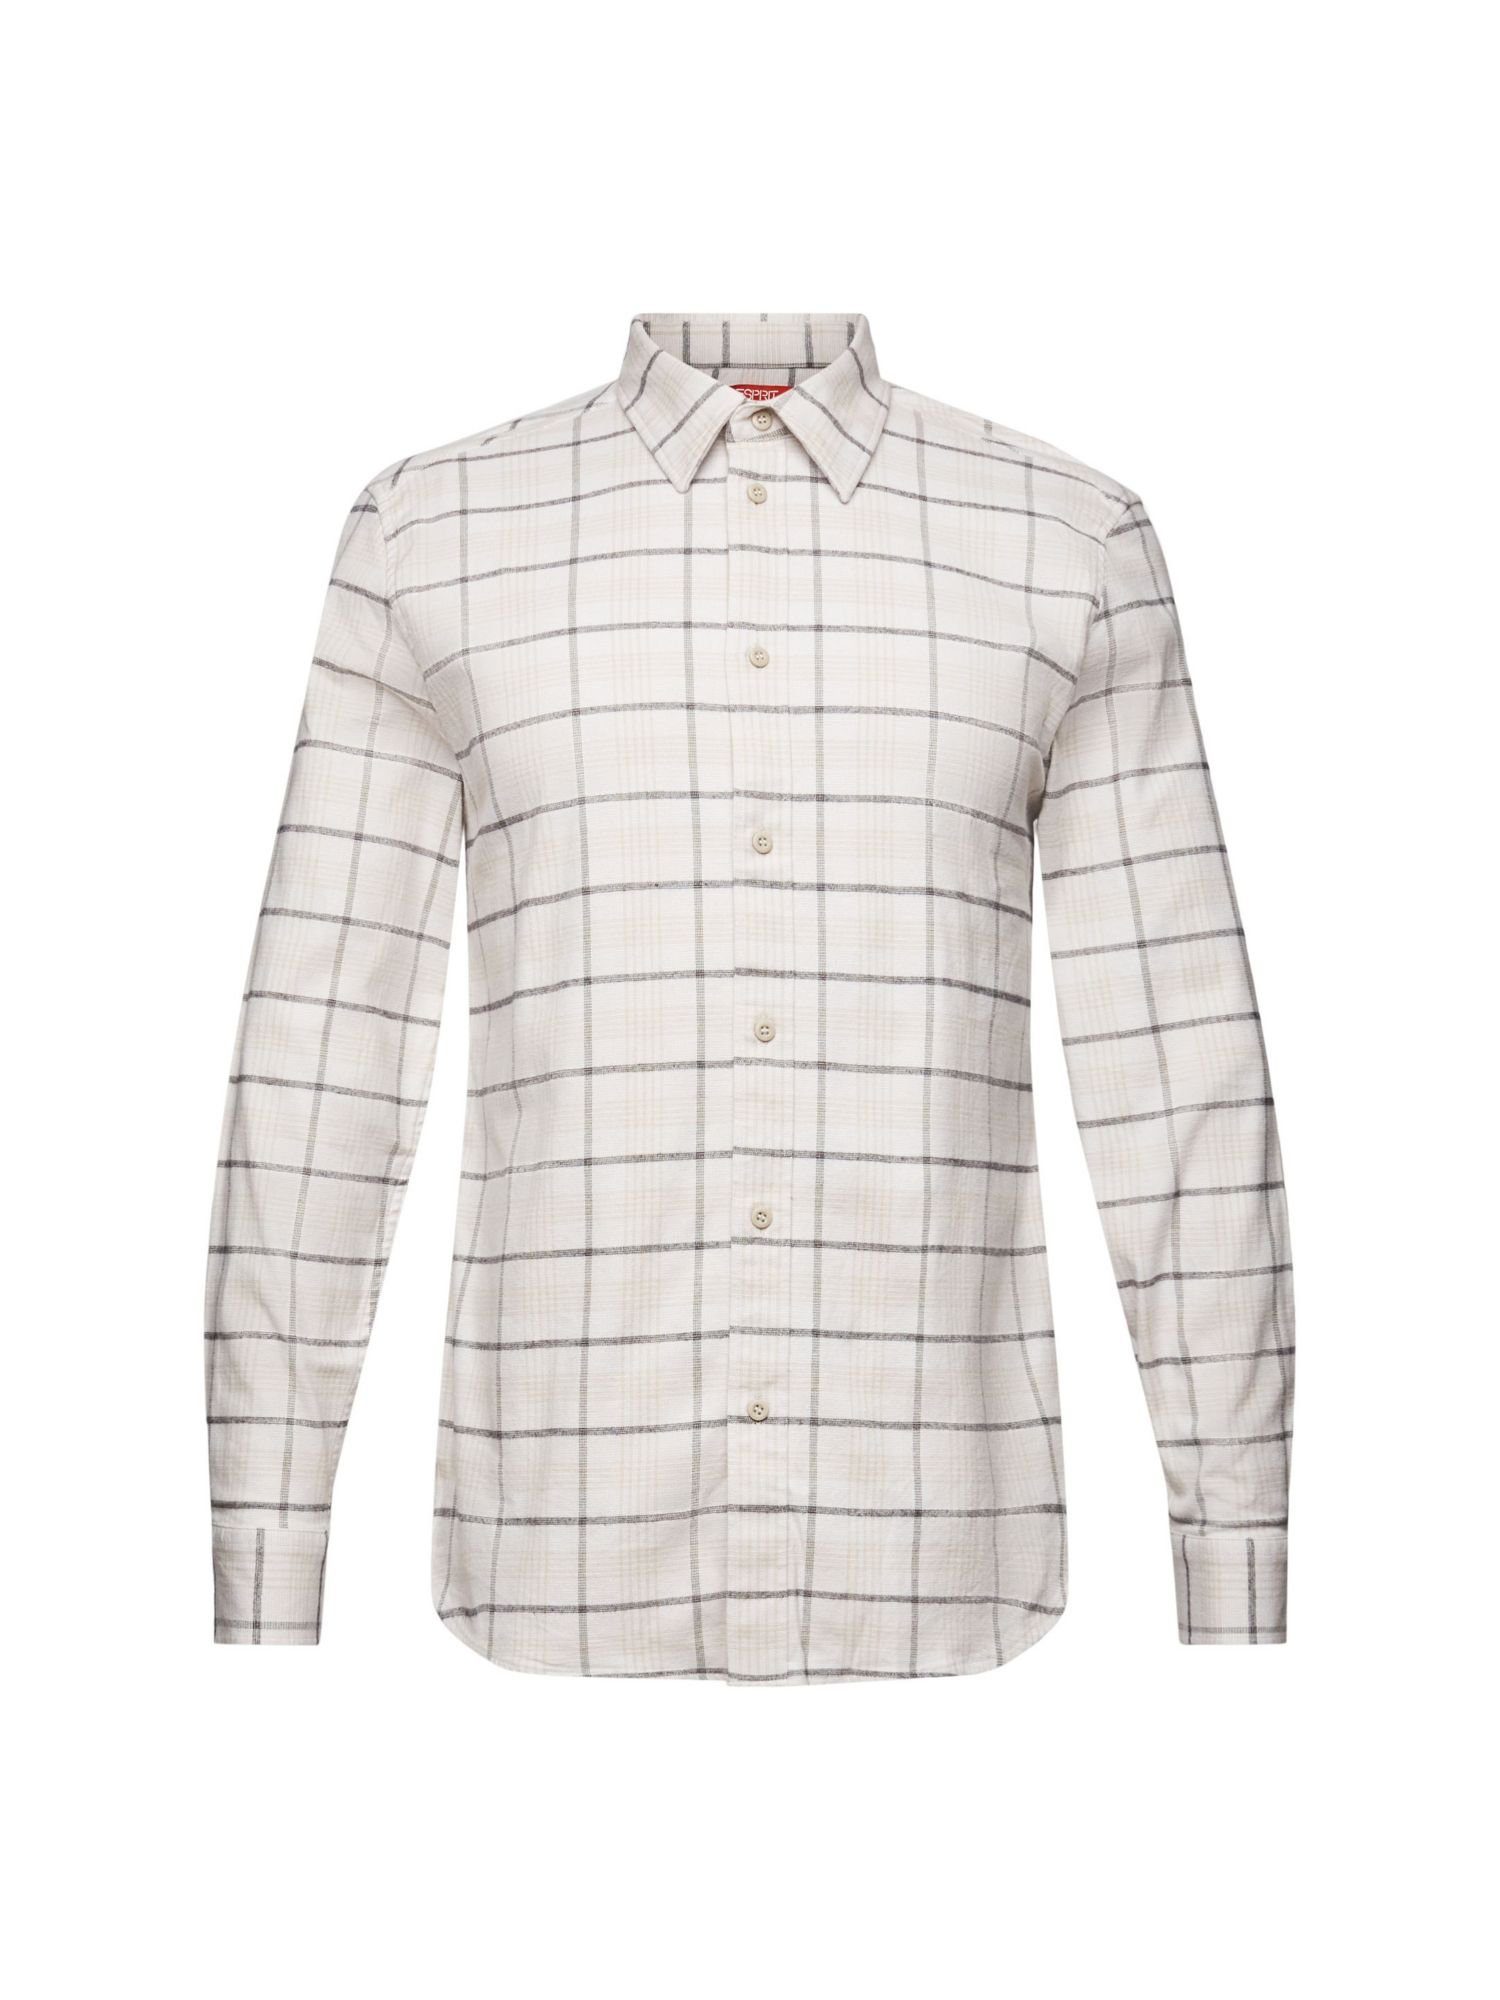 Esprit Collection Businesshemd Flanellhemd mit Karomuster WHITE